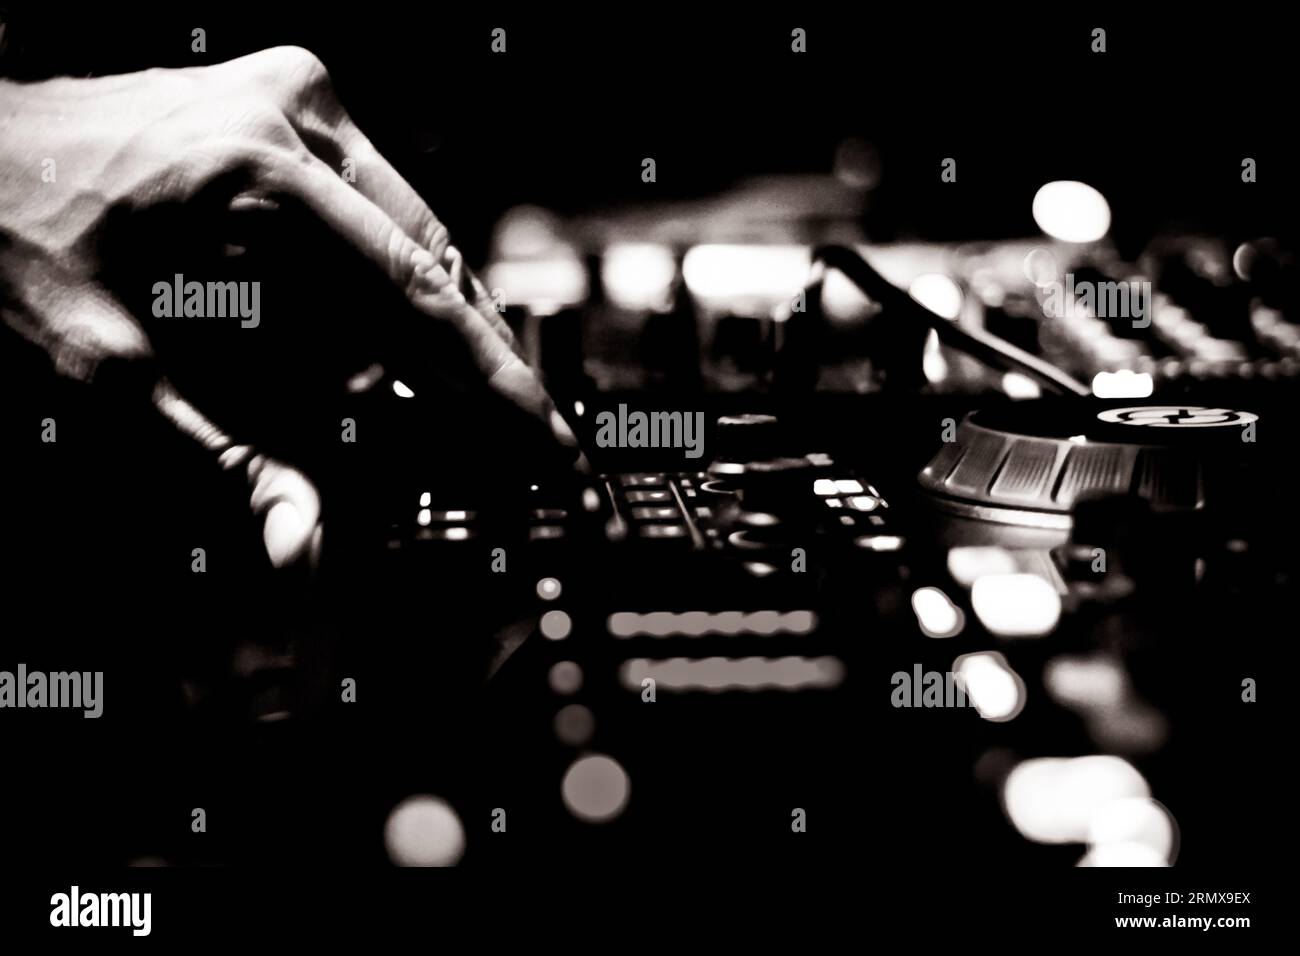 Club DJ adjusting controls on mixer. Stock Photo